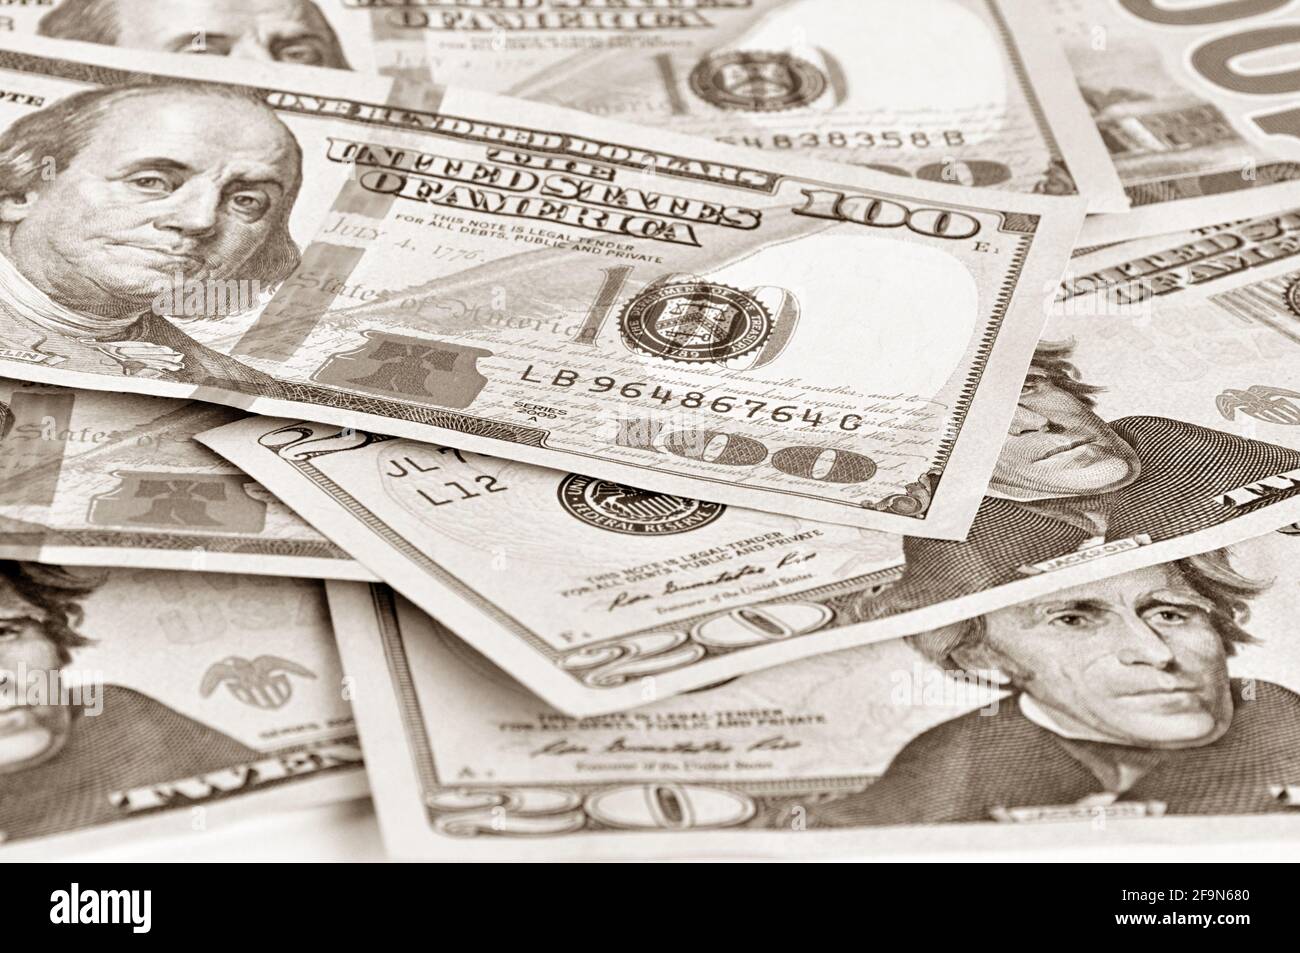 Money - United States dollars (USD) bills in retro style sepia effect Stock Photo